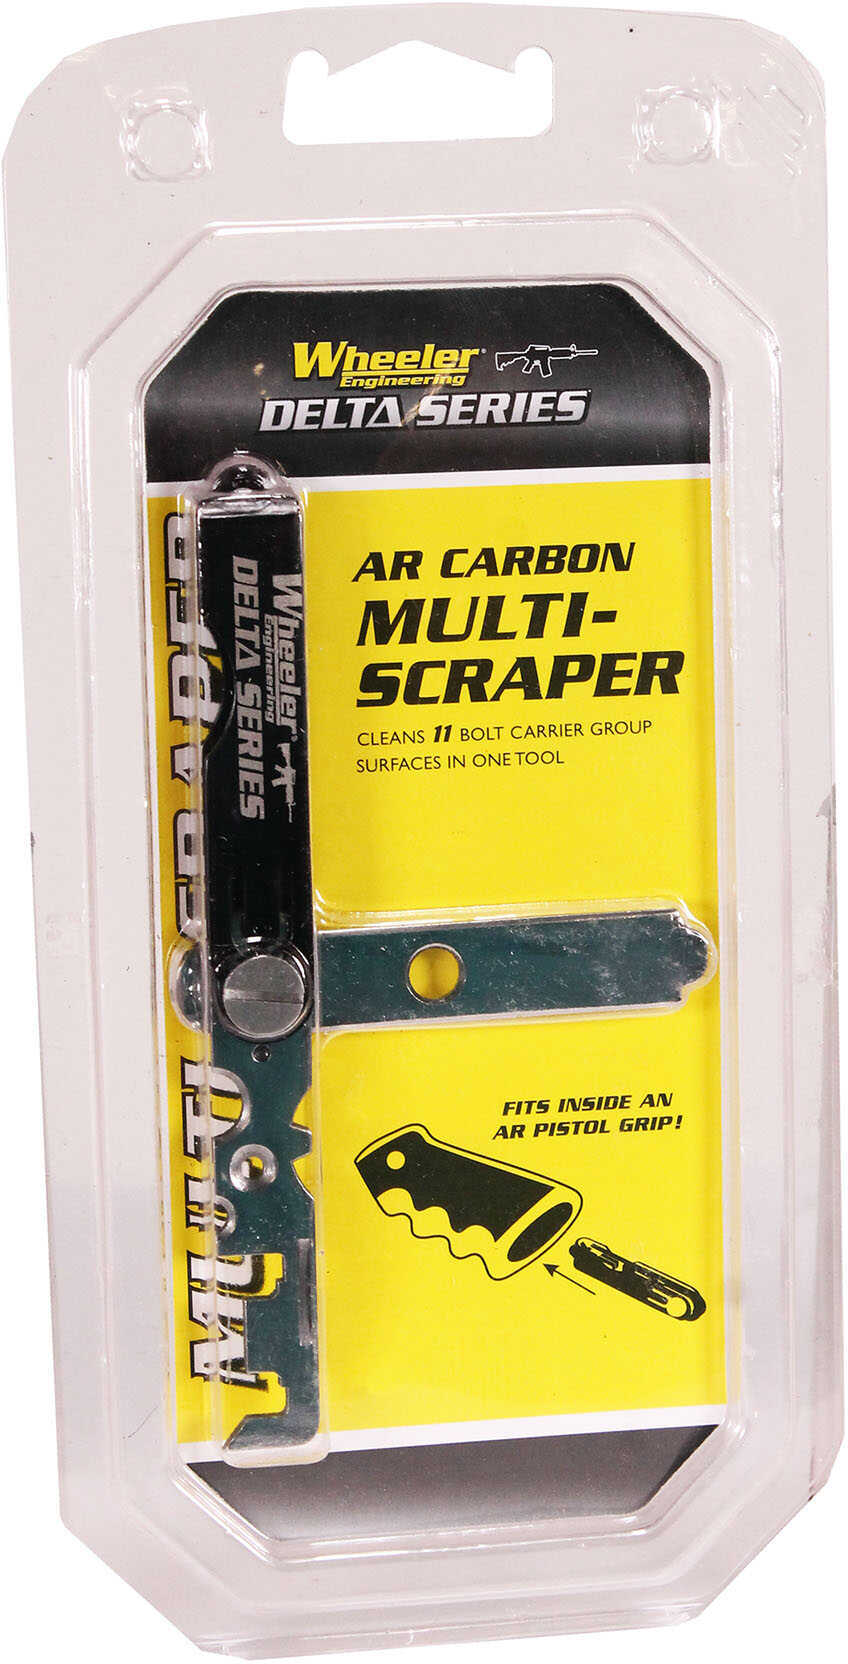 Wheeler AR Carbon Multi-Scraper